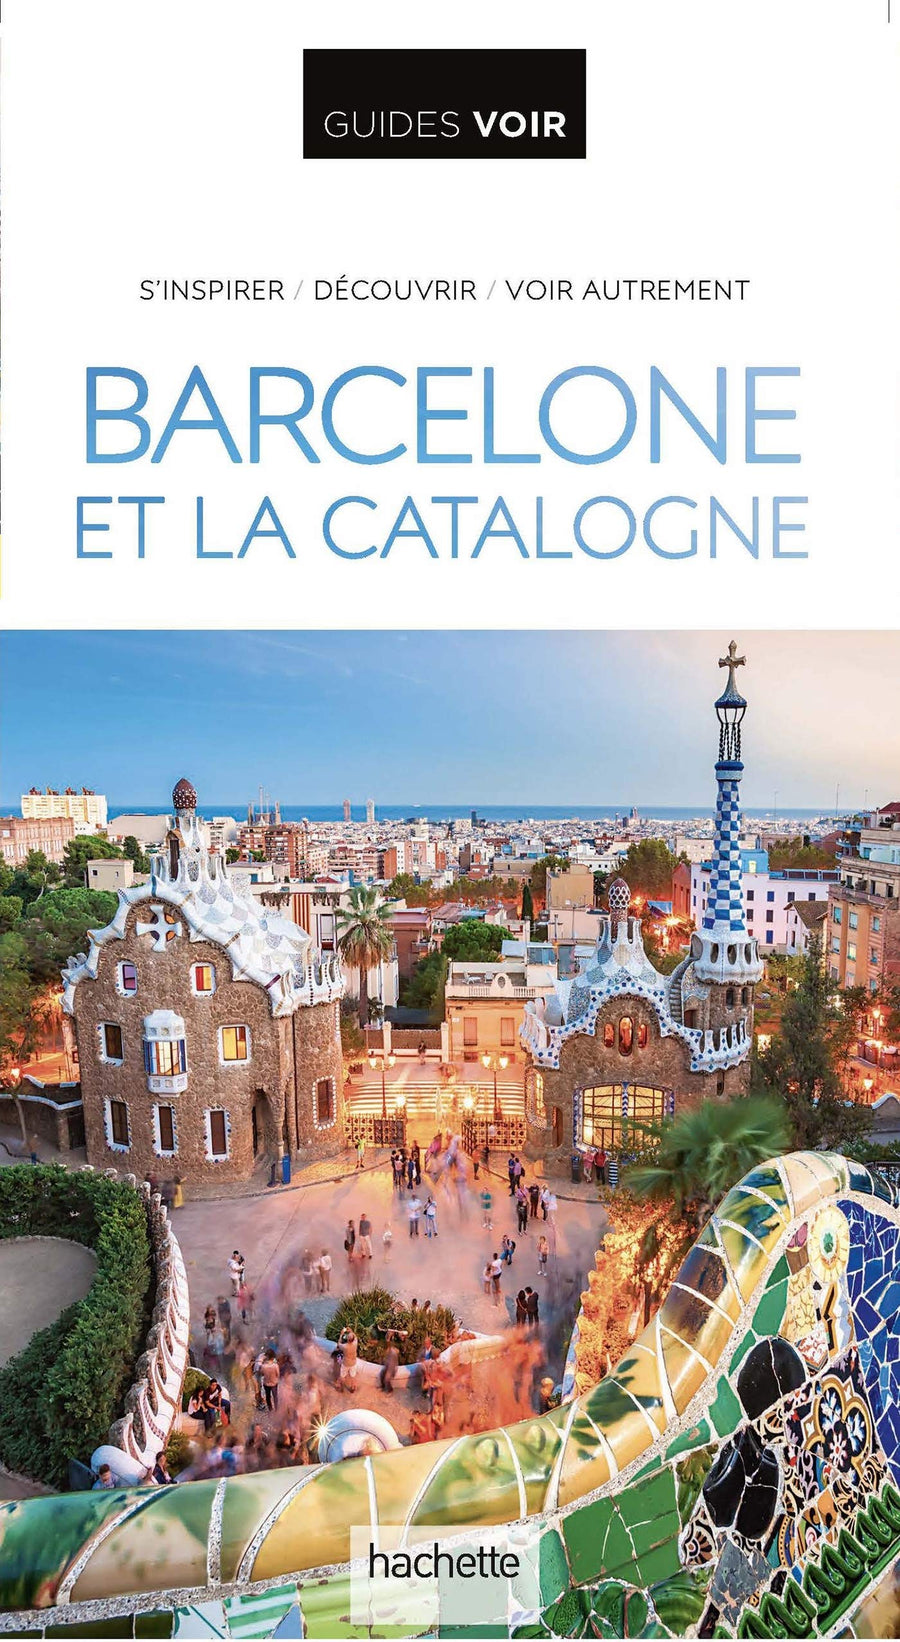 Guide de voyage - Barcelone & la Catalogne - Édition 2021 | Guides Voir guide de voyage Guides Voir 